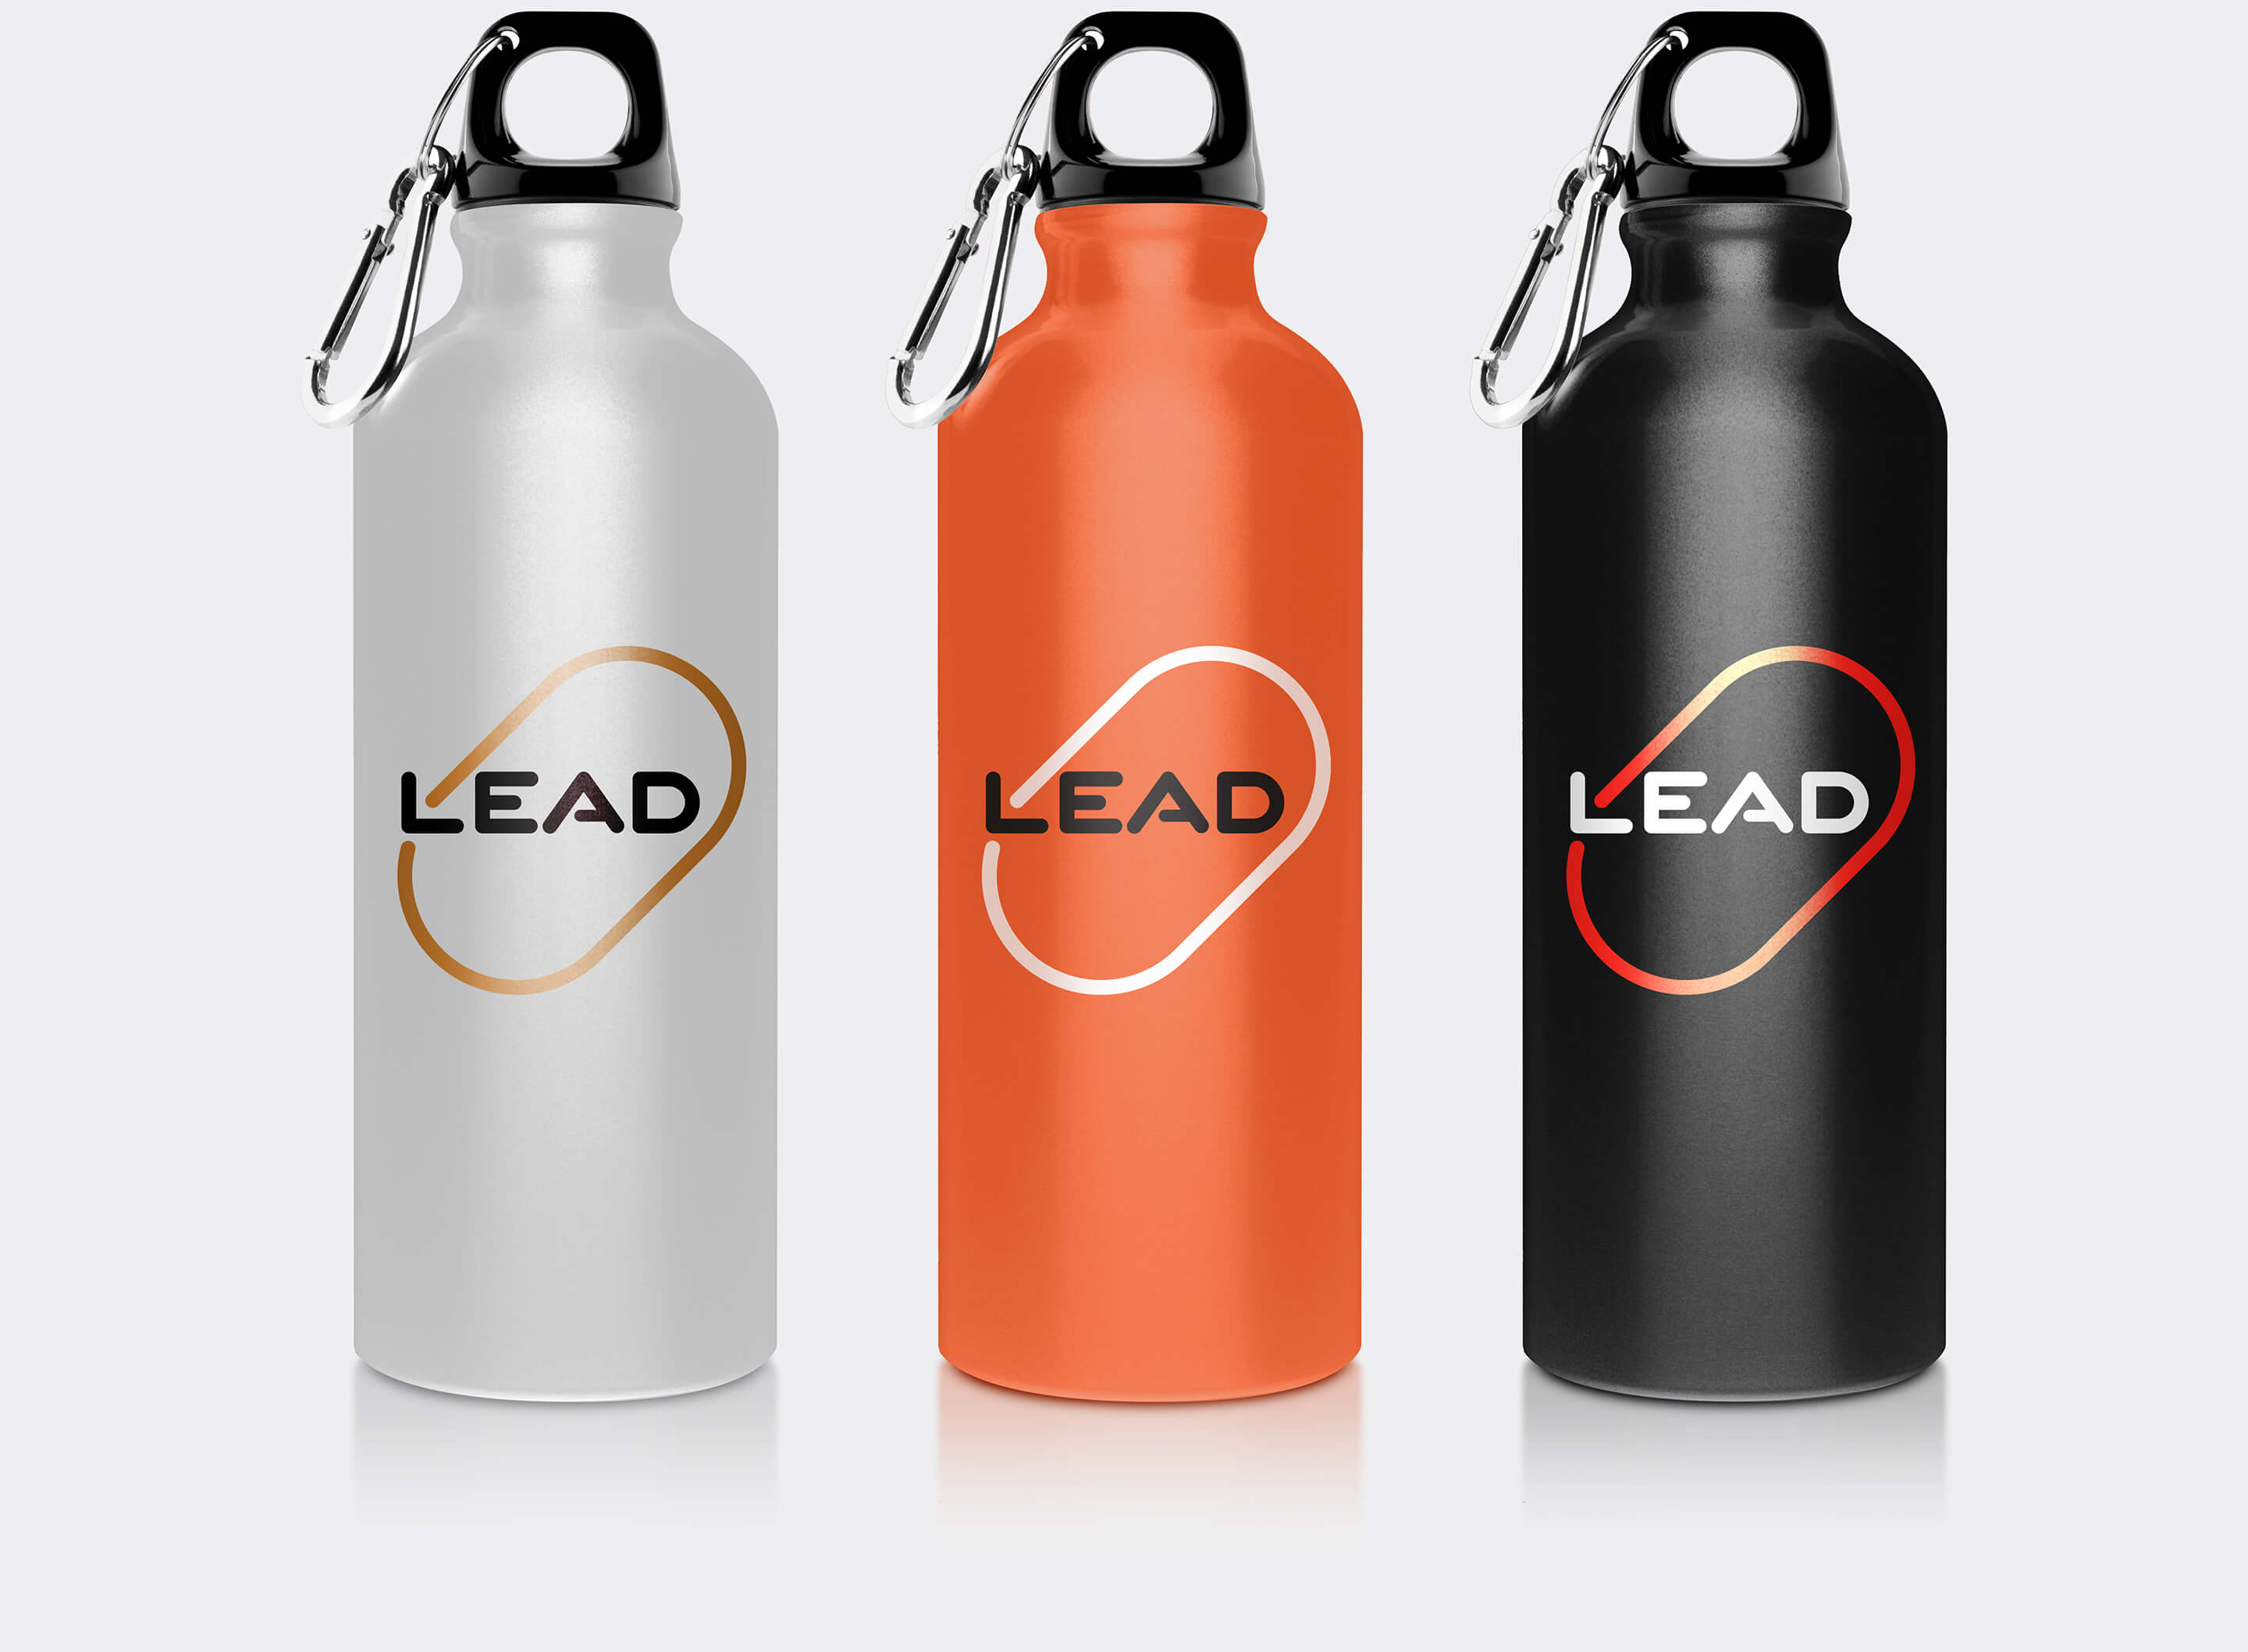 Lead branded bottles